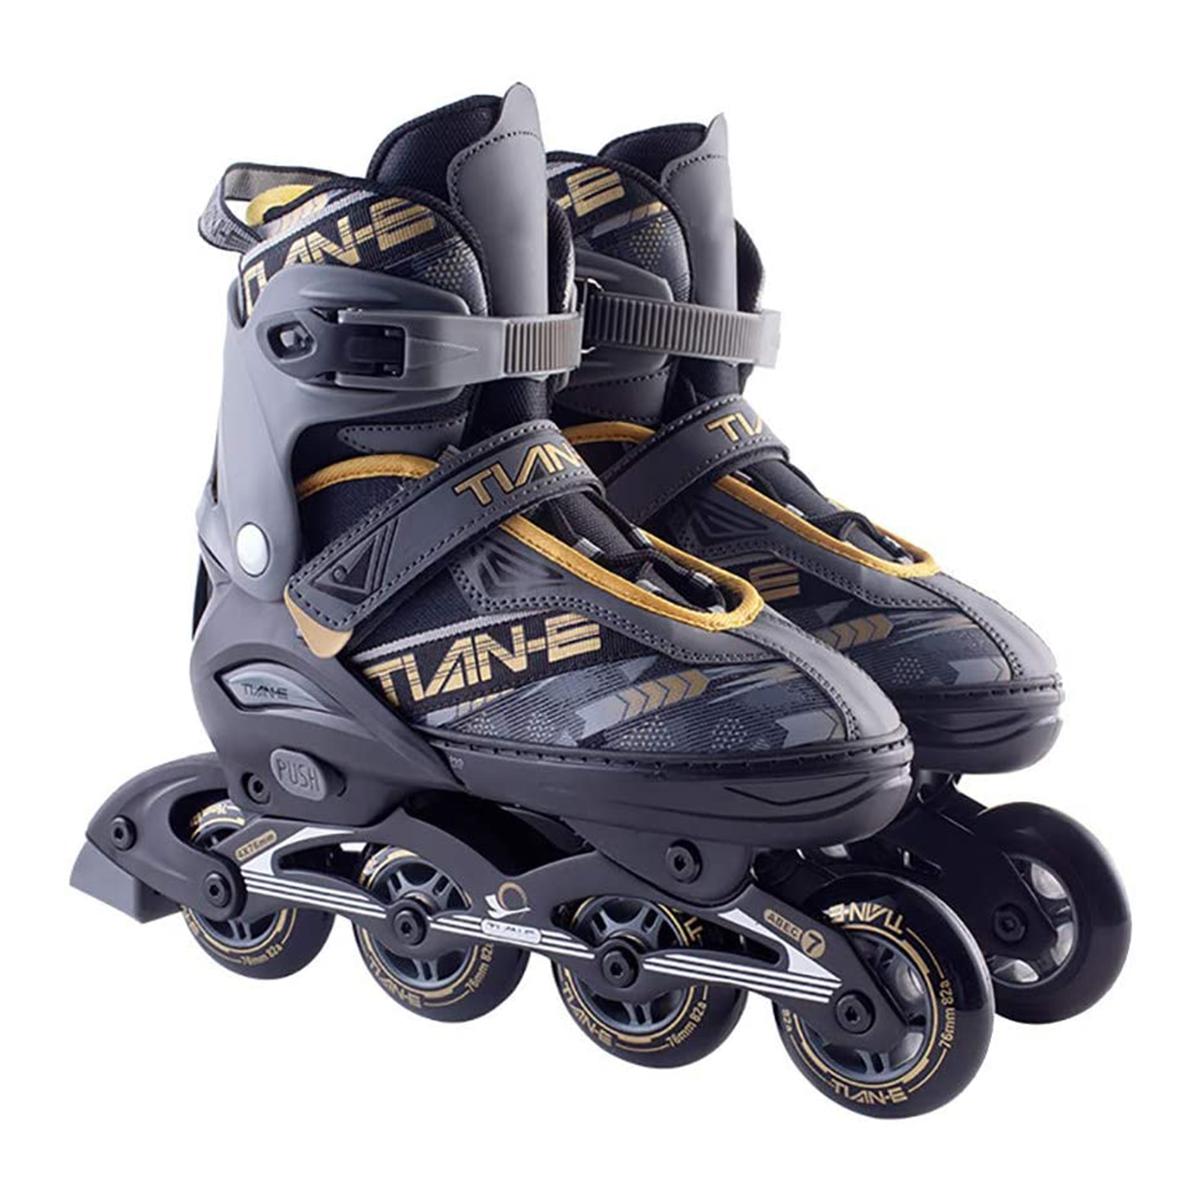 Roller skate shoes inline(size 39-42)